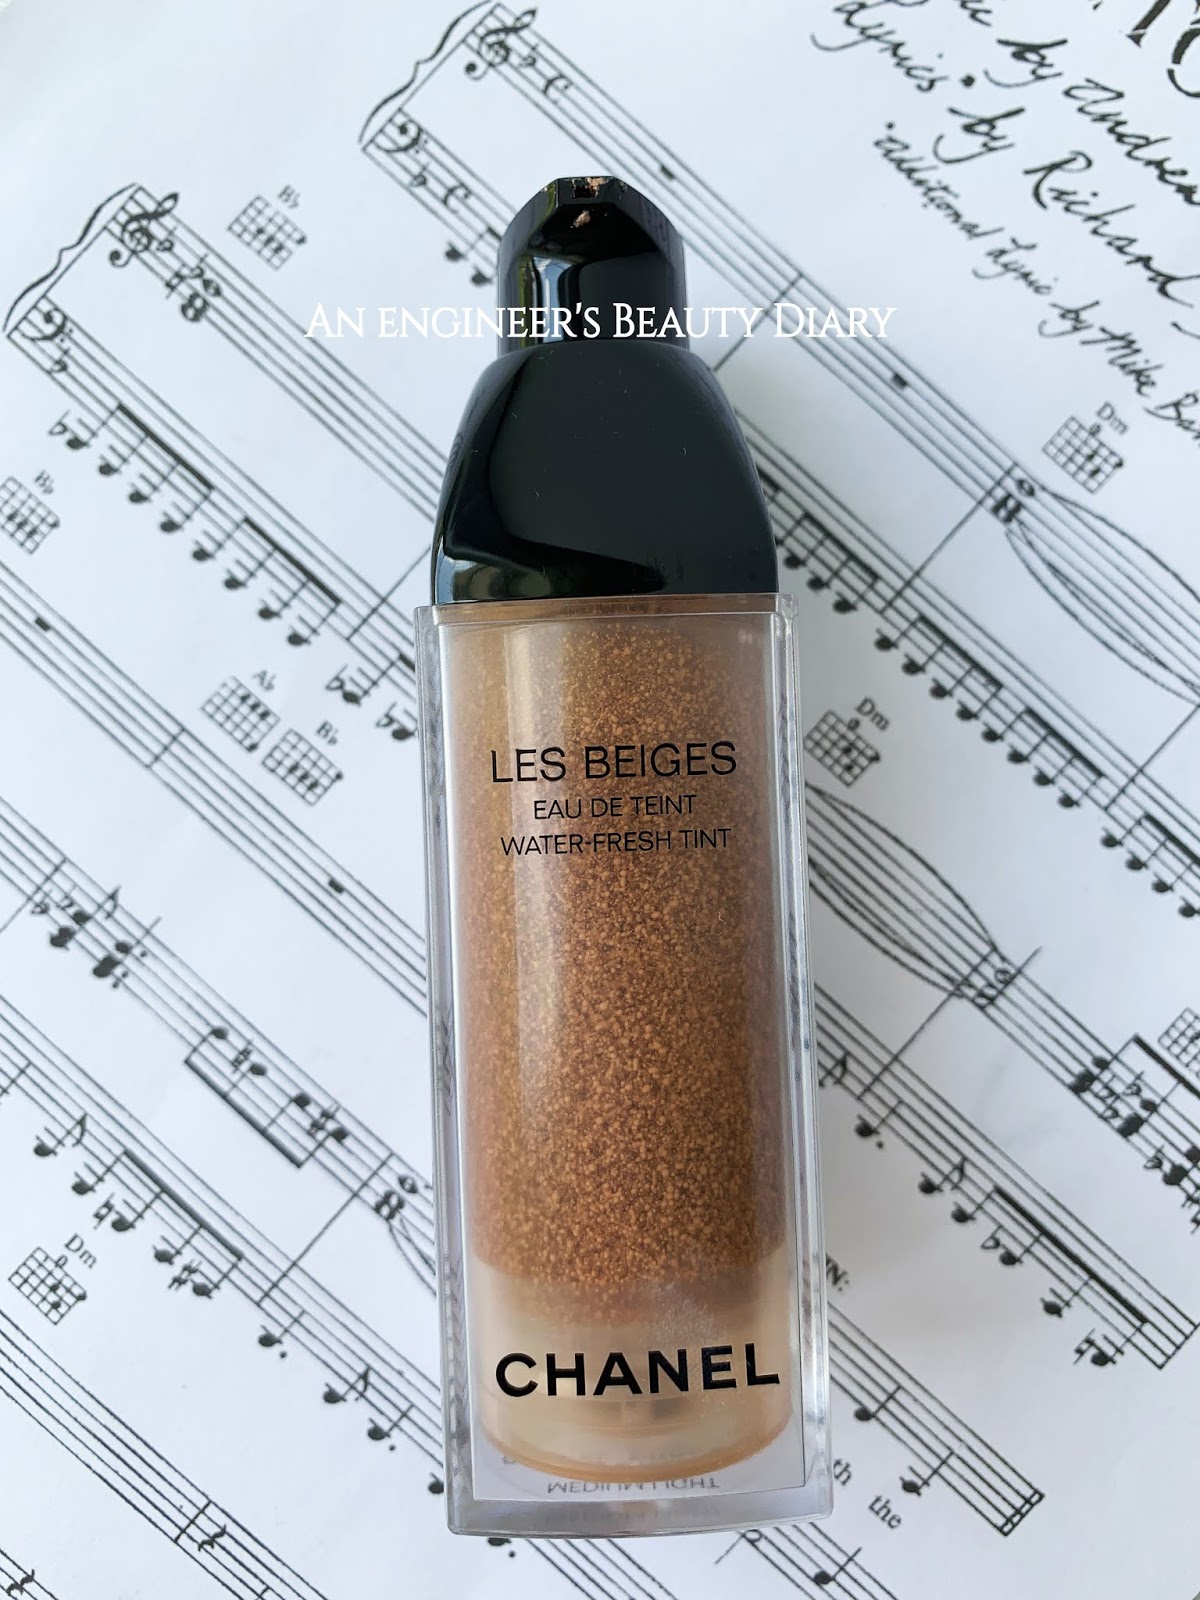 Chanel Les Beiges Water Fresh Tint Medium Light